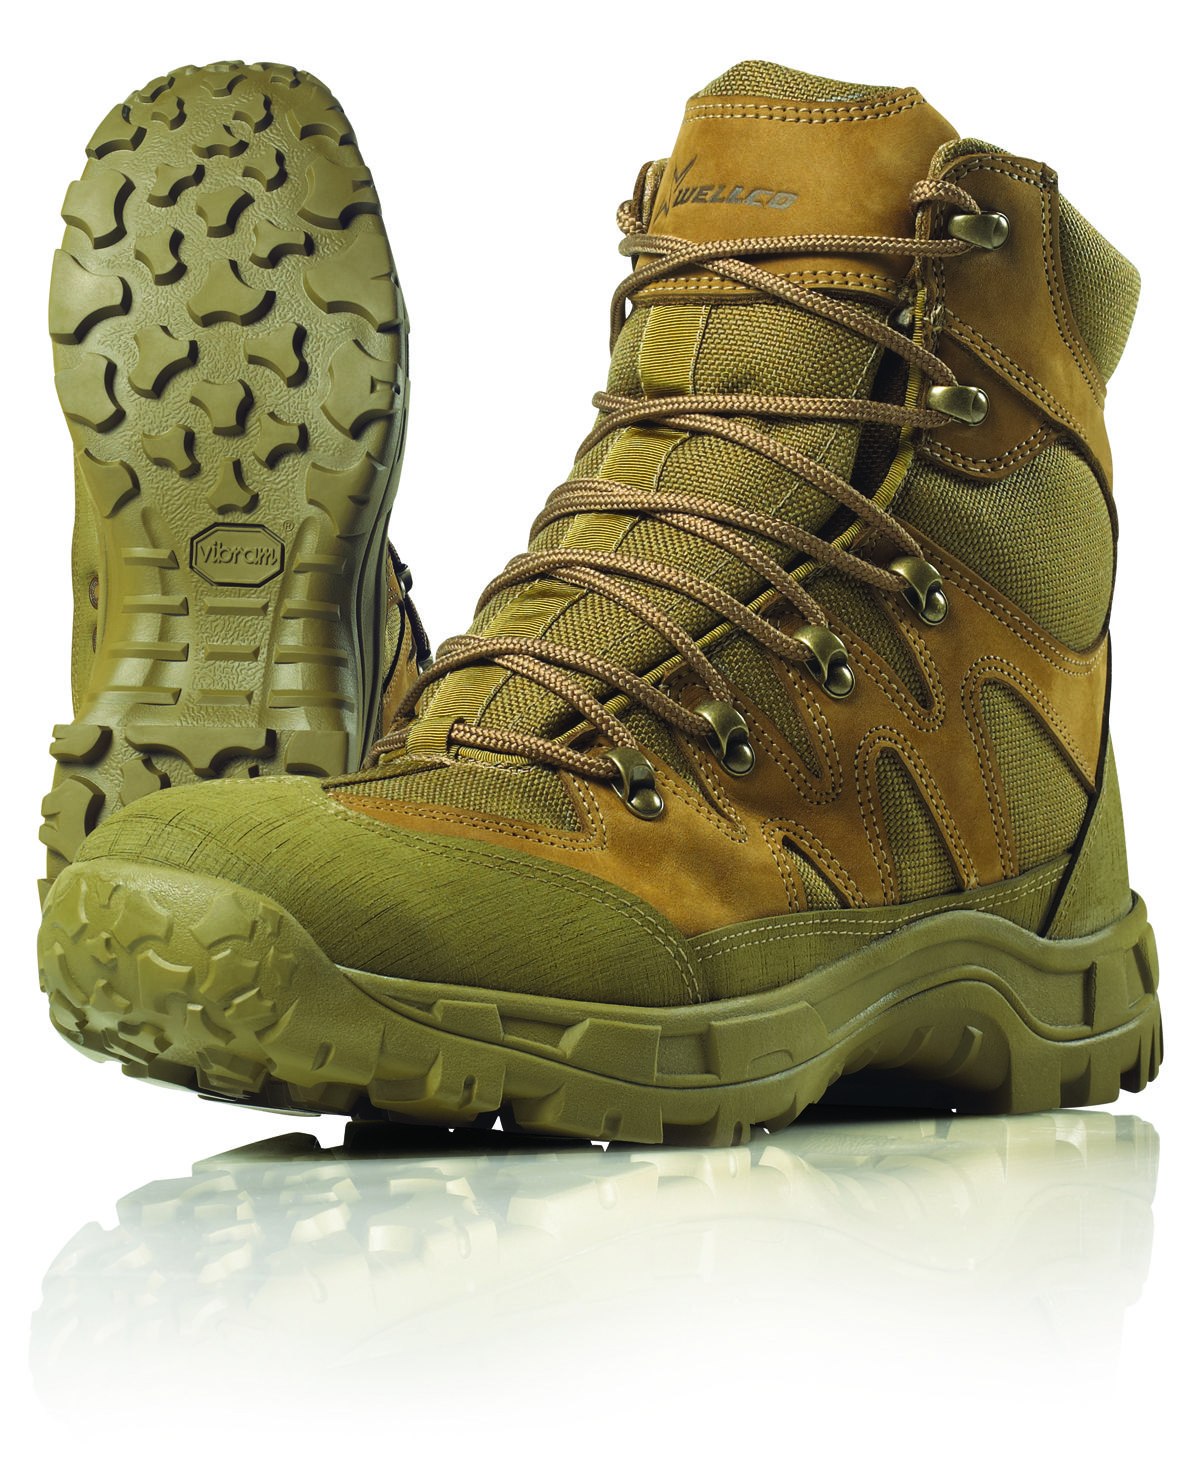 Американская мужская обувь. Wellco ботинки. Wellco Combat Boots. Ботинки Wellco (USA). Wellco Combat Hiker.